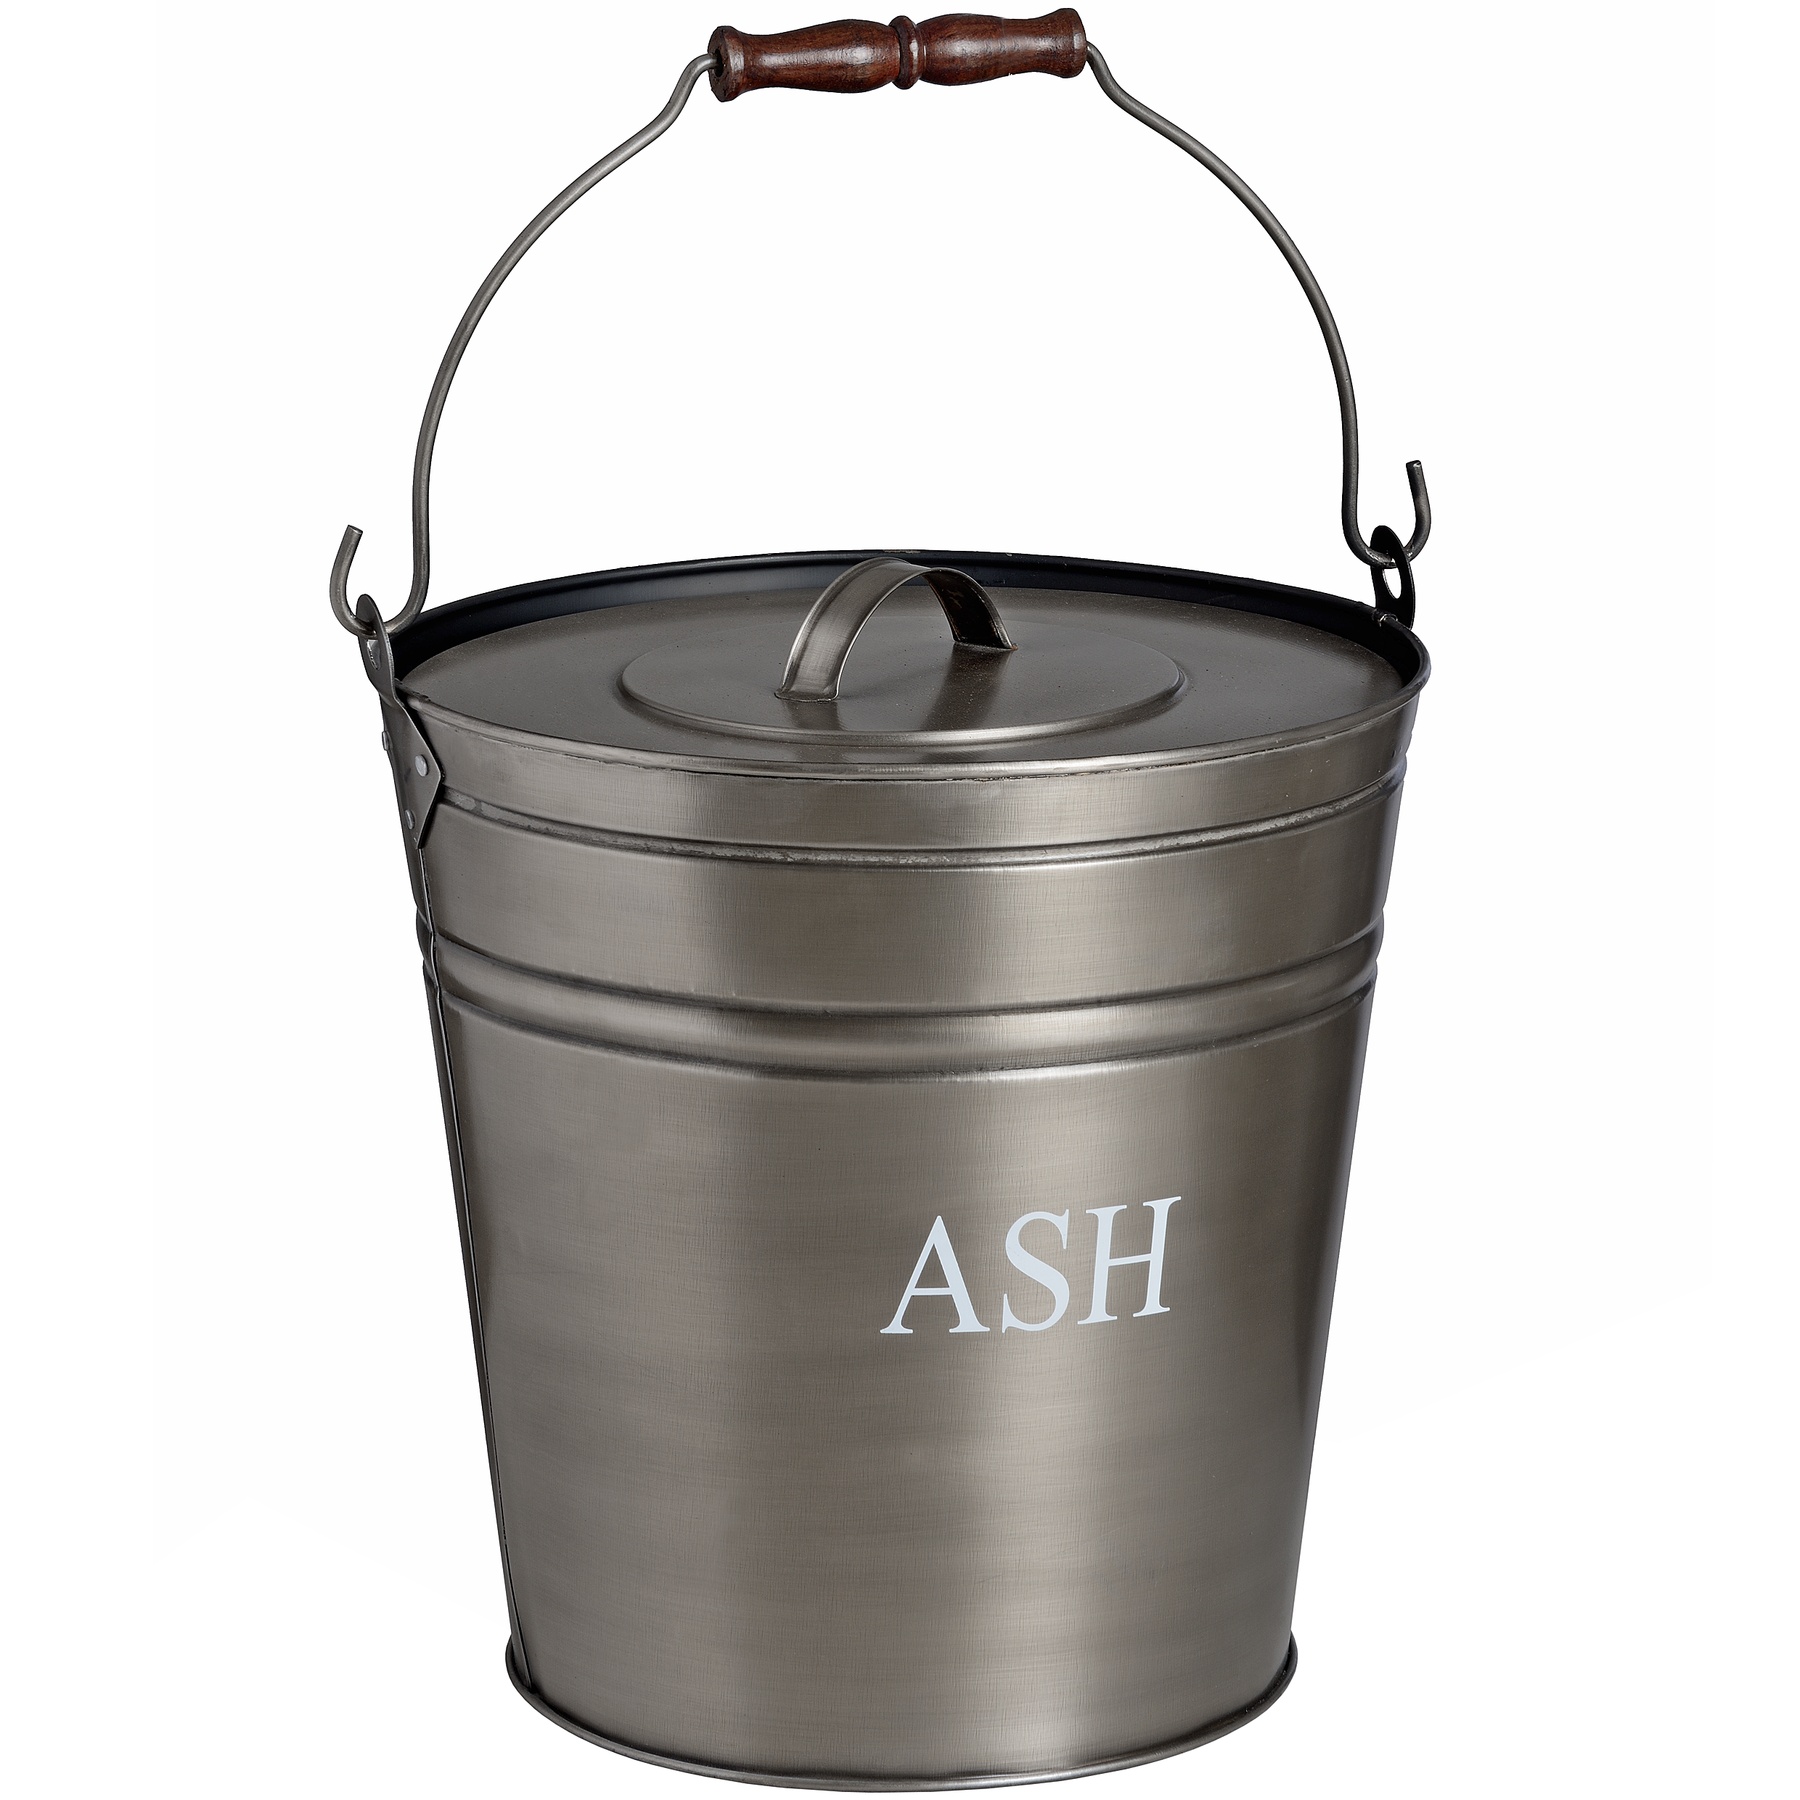 Antique Pewter Ash Bucket - Image 1